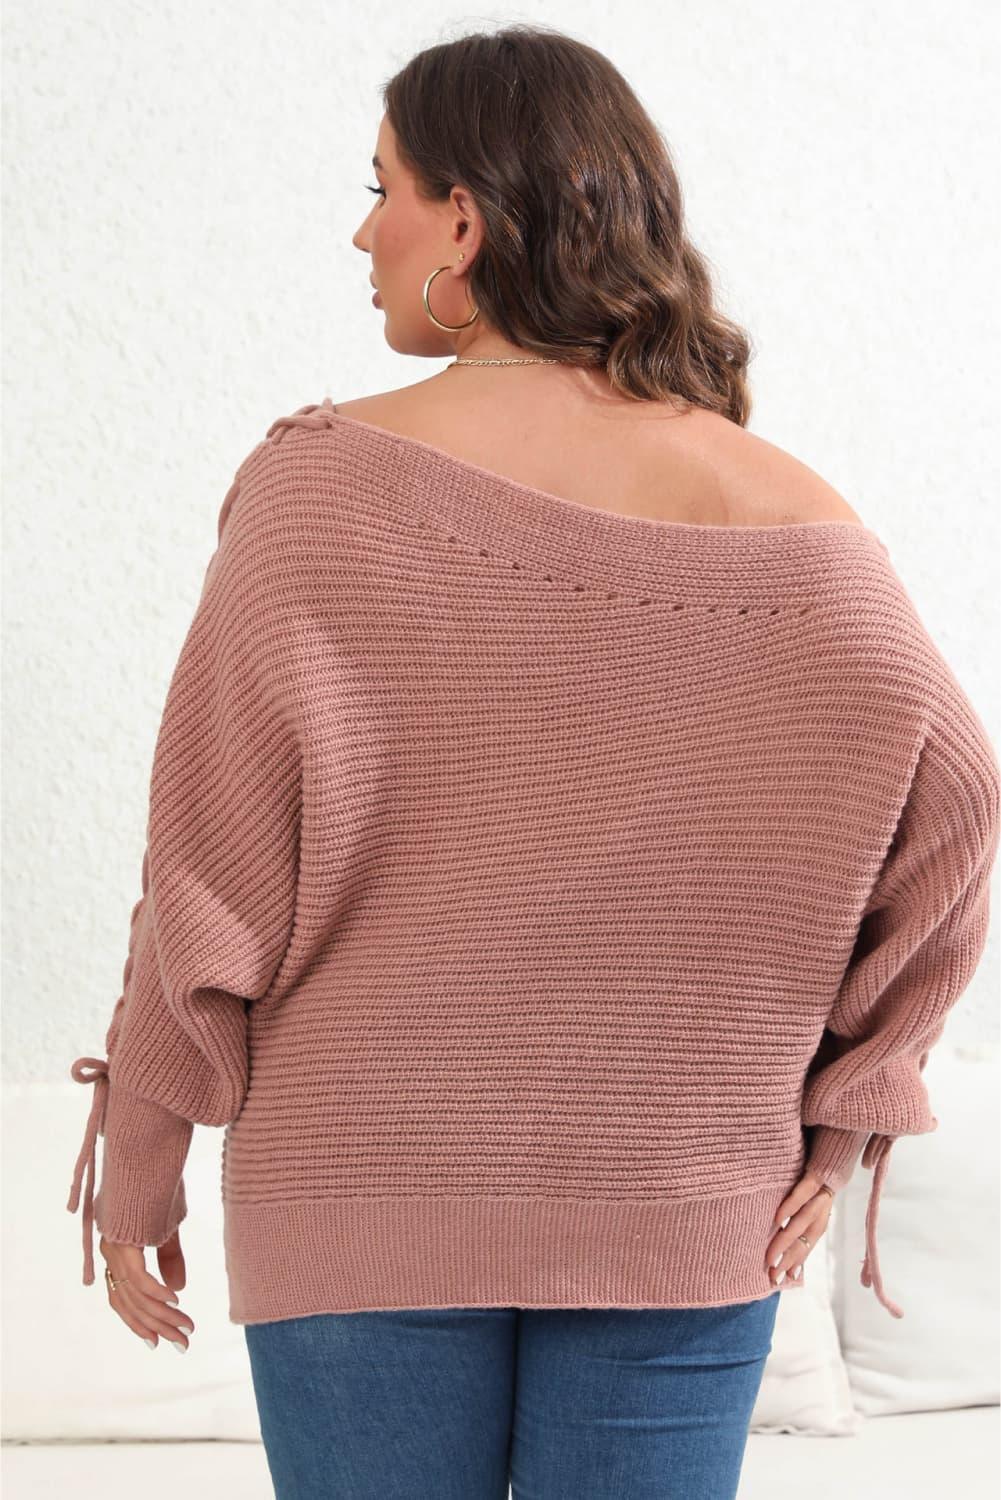 Tied Sleeves One Shoulder Beaded Plus Size Womens Sweater - MXSTUDIO.COM